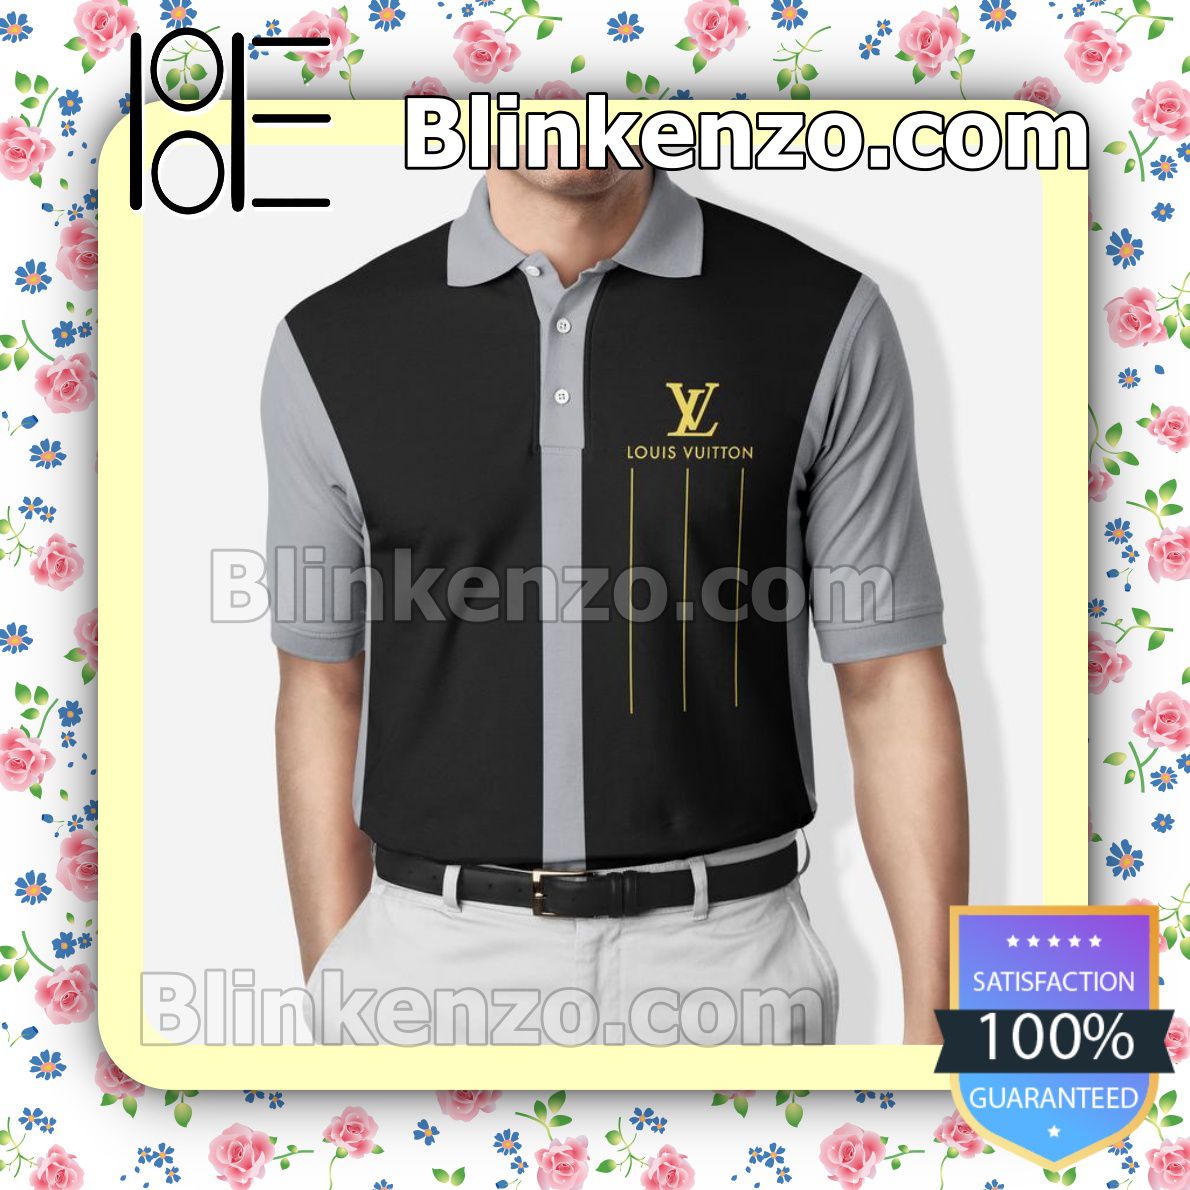 Lv Louis Vuitton Black Grey Embroidered Polo Shirts